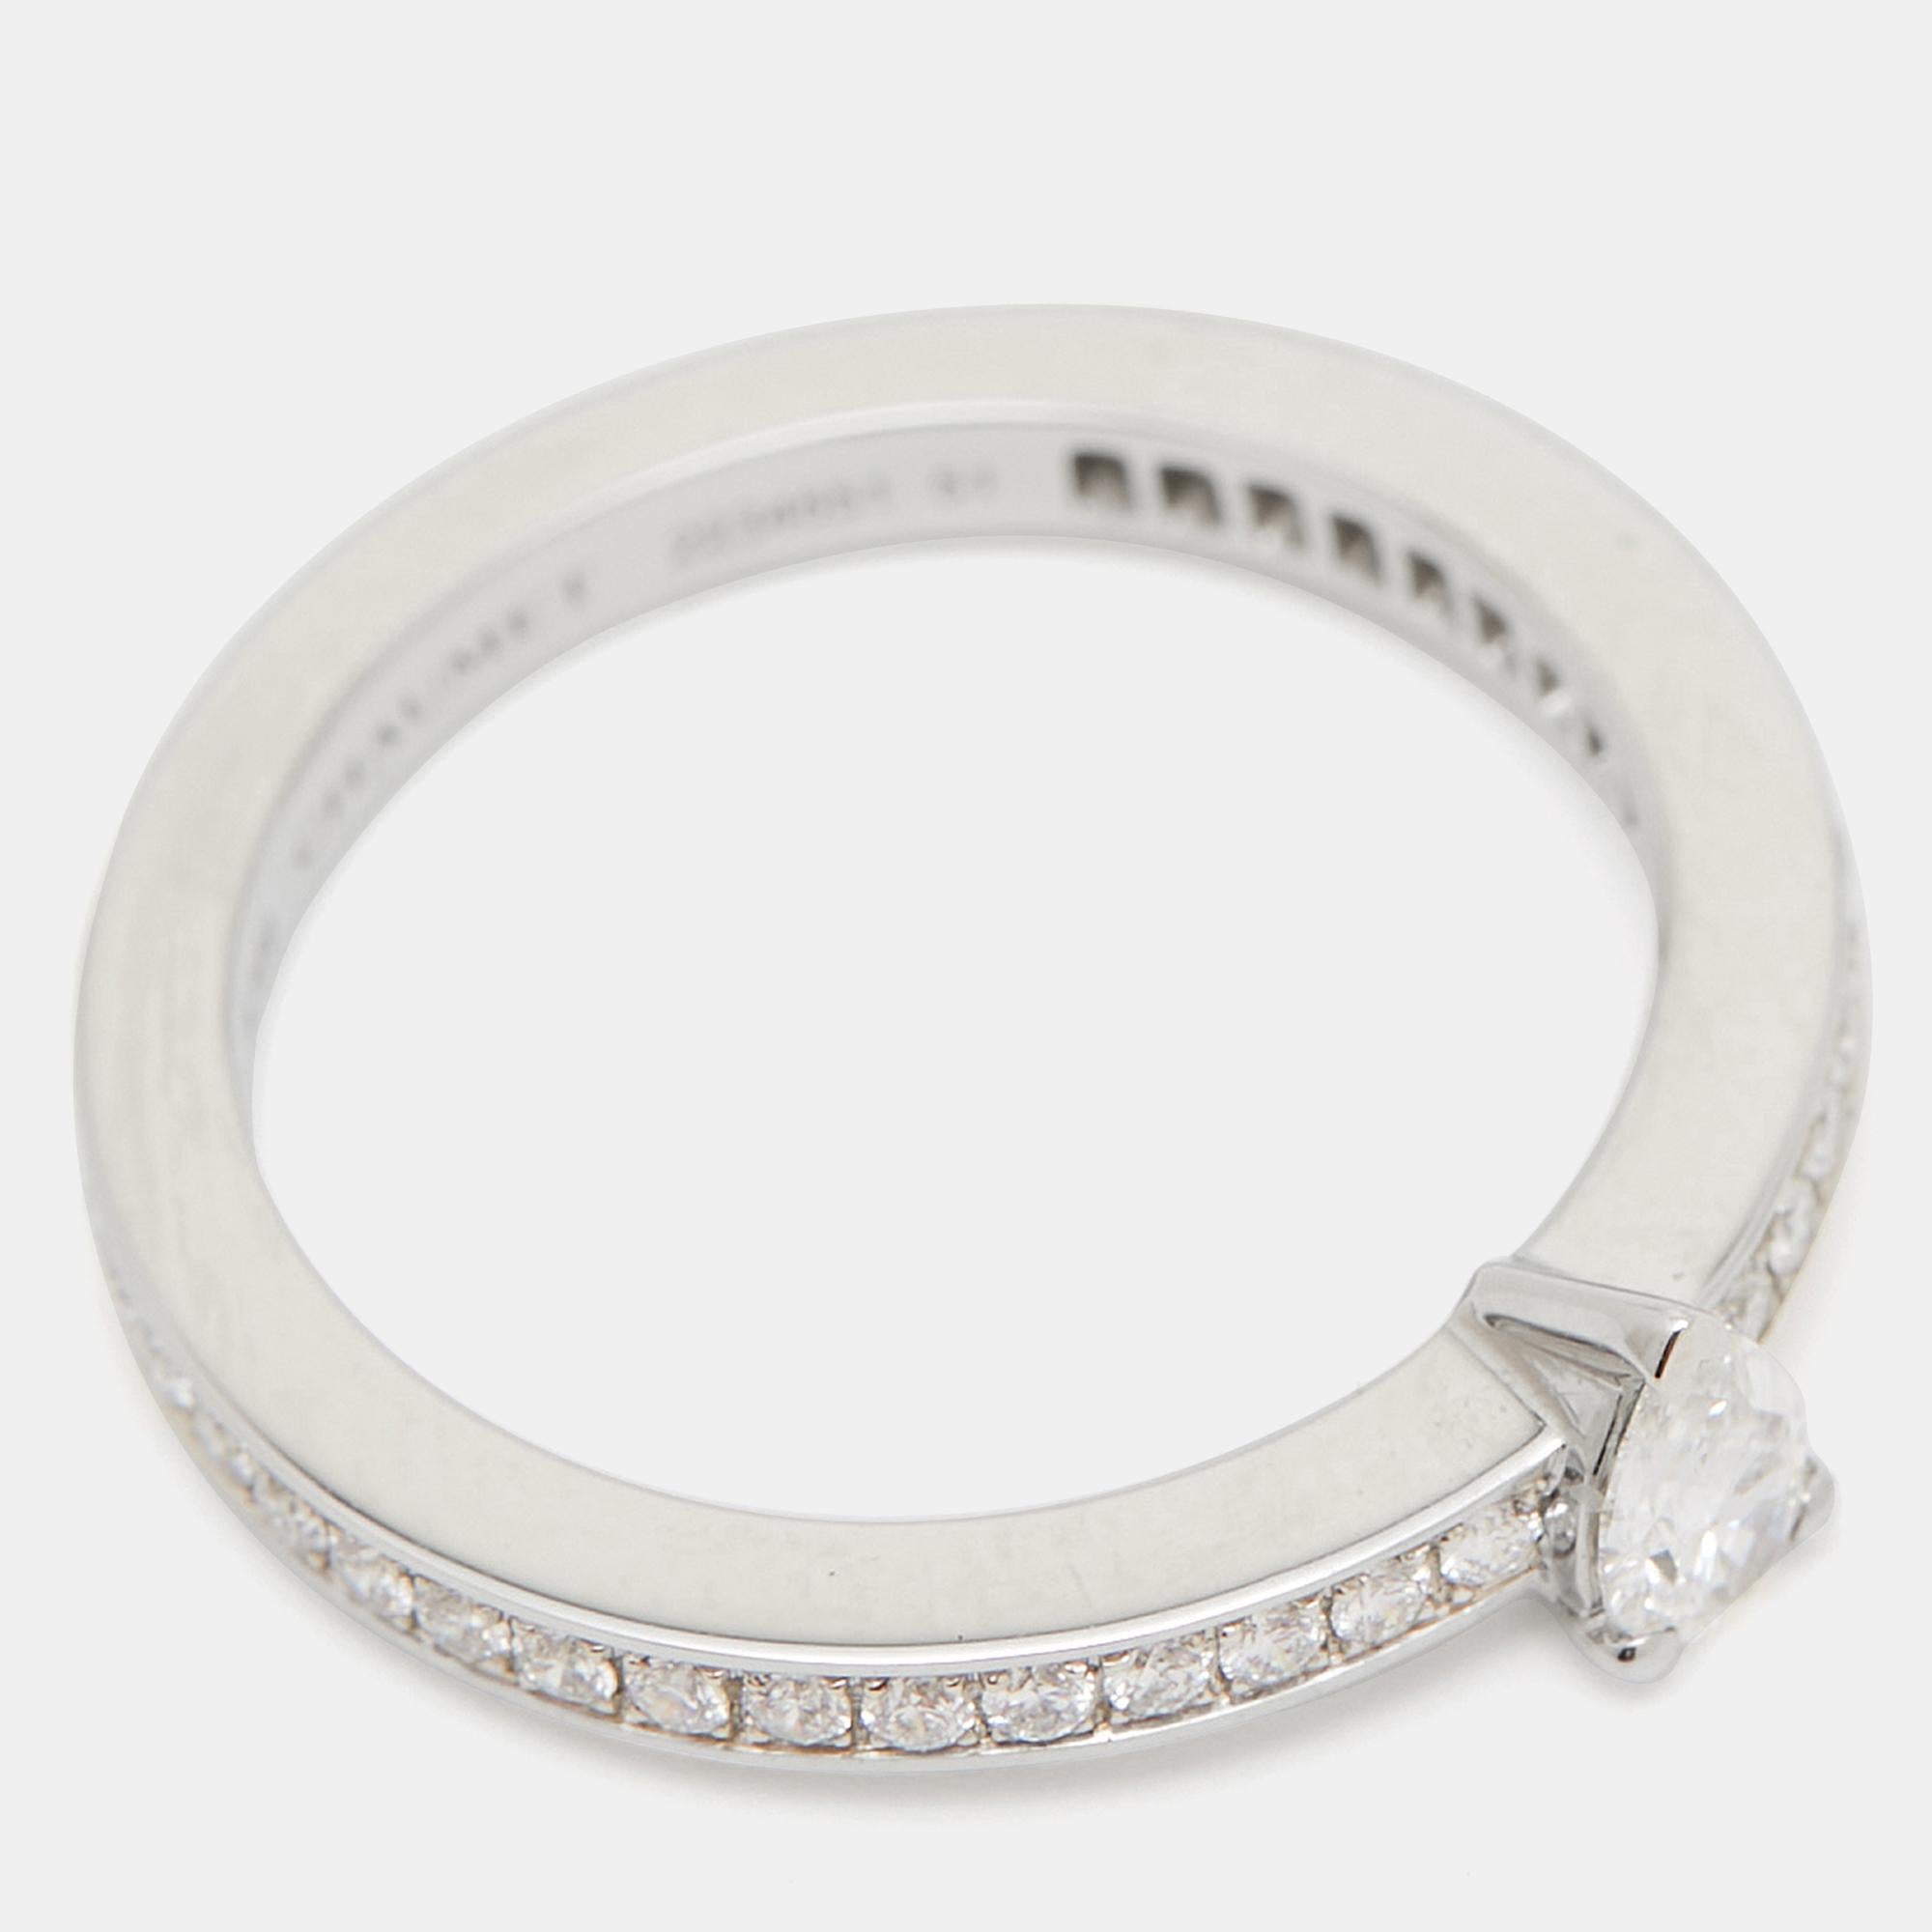 Aesthetic Movement Chaumet Triomphe de Chaumet Diamond Platinum Ring Size 51 For Sale